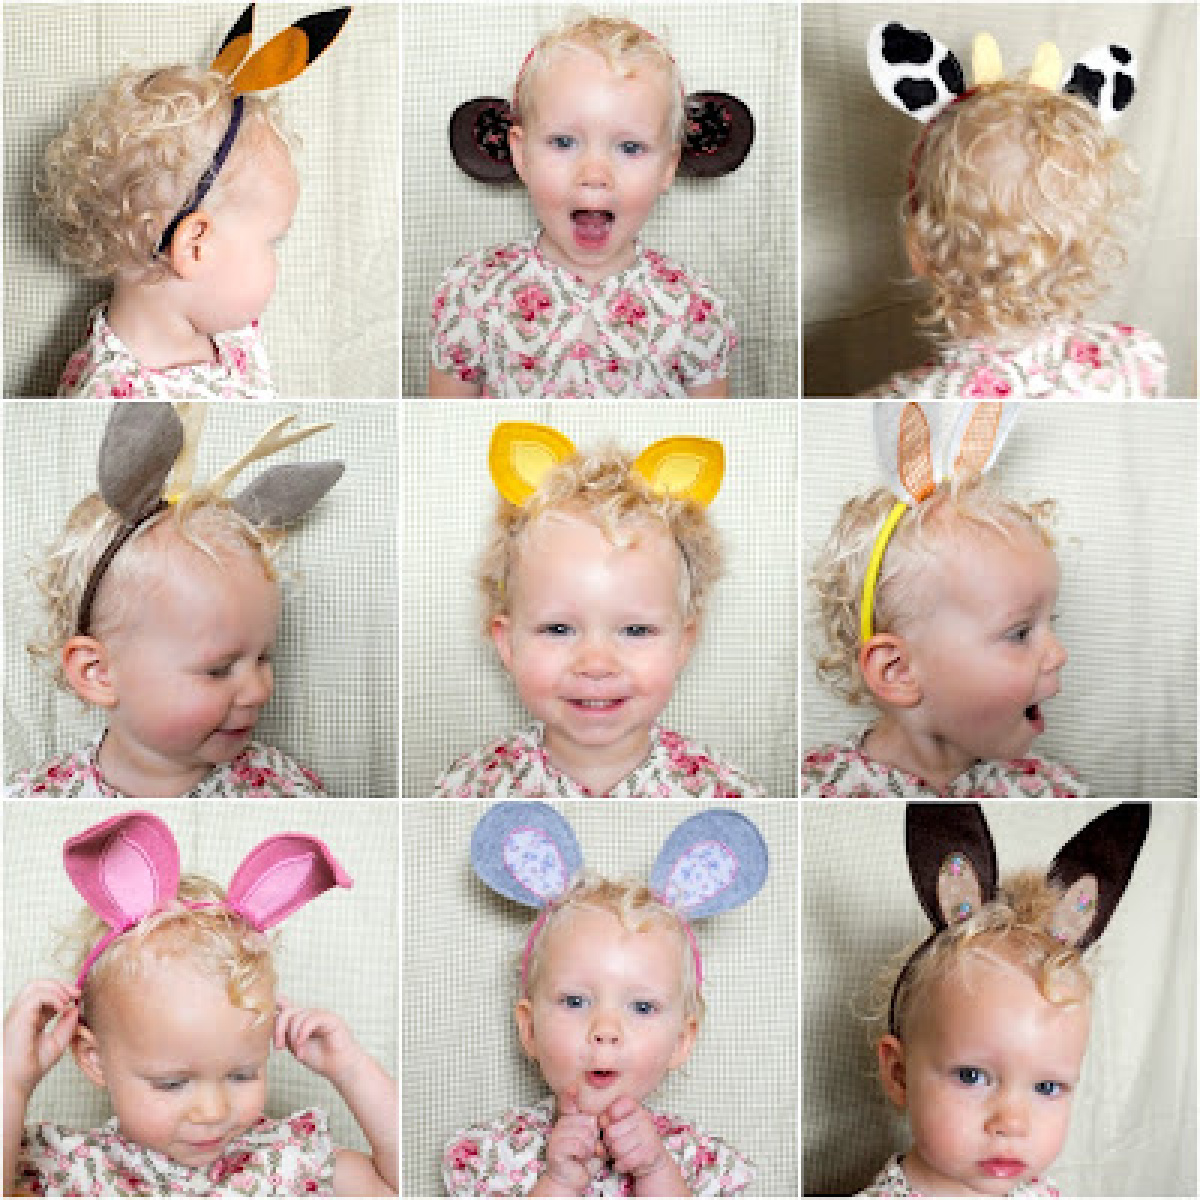 Dress up ideas- animal ears on little girl- kids activities blog